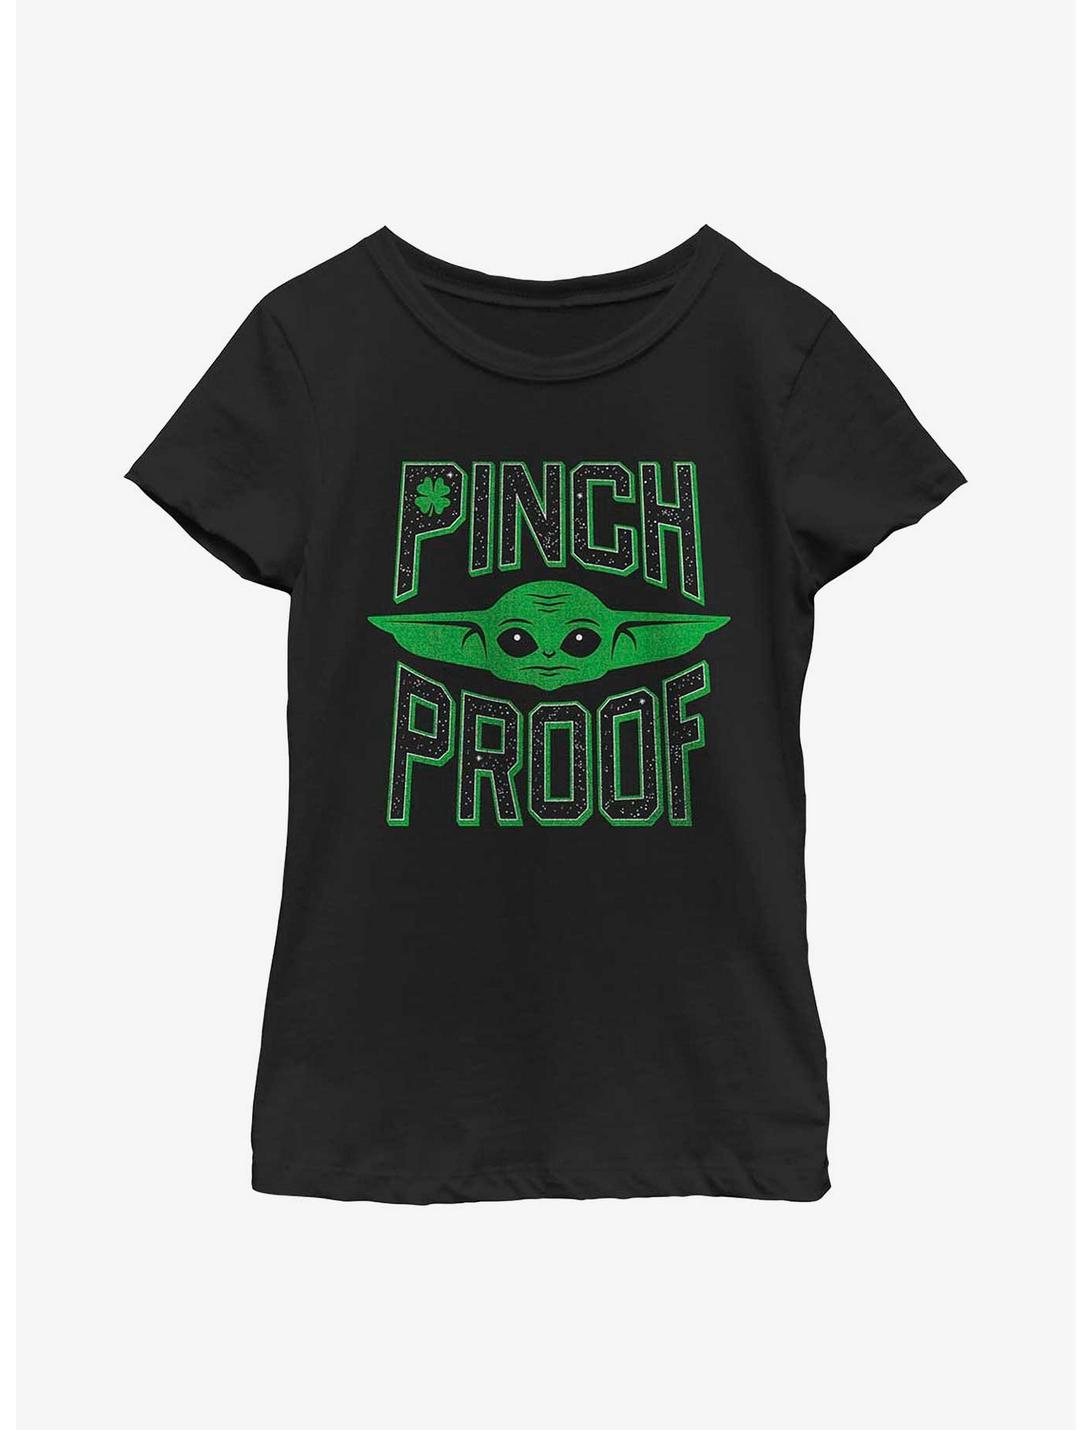 Star Wars The Mandalorian Pinch Proof Youth Girls T-Shirt, BLACK, hi-res